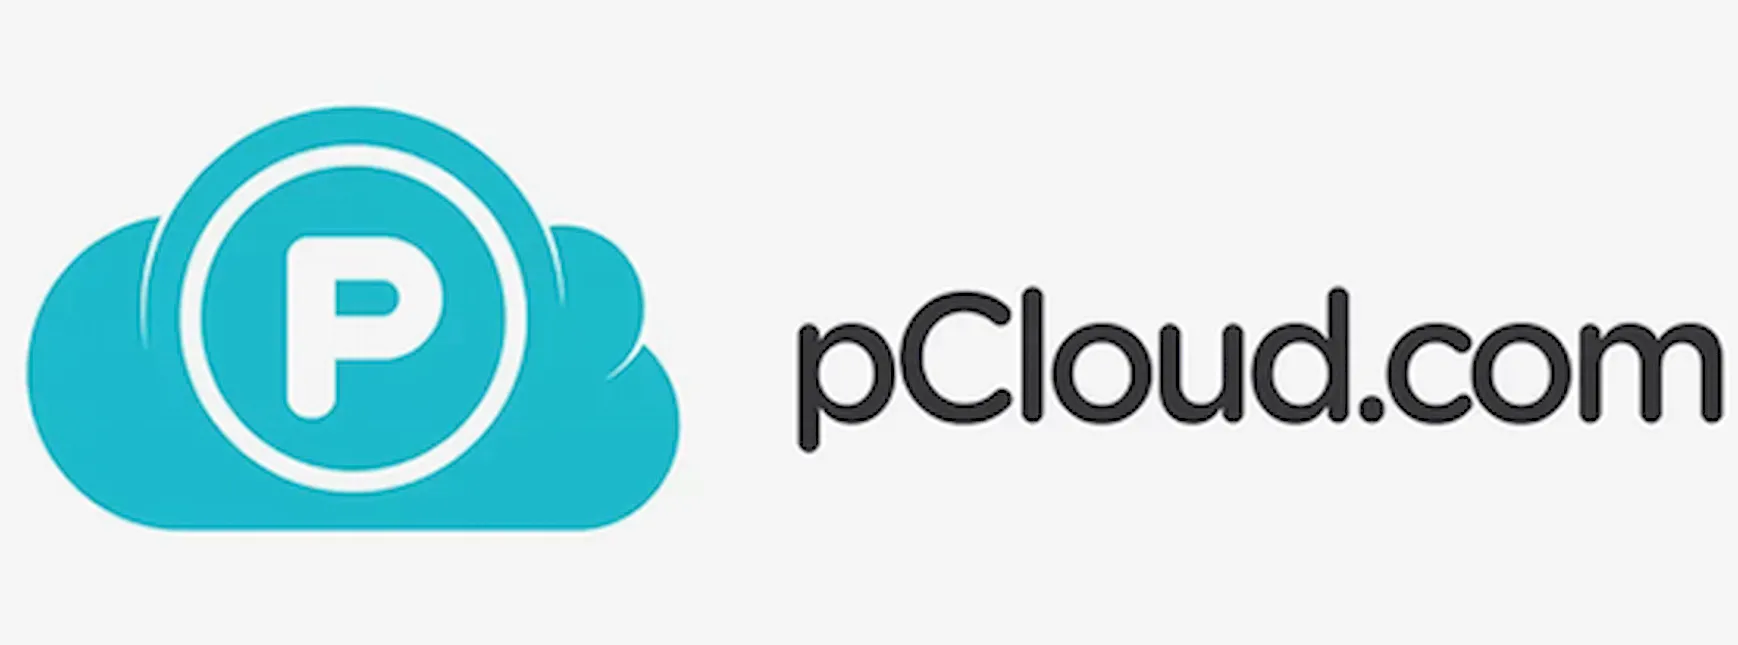 Эмблема облачного хранилища pCloud